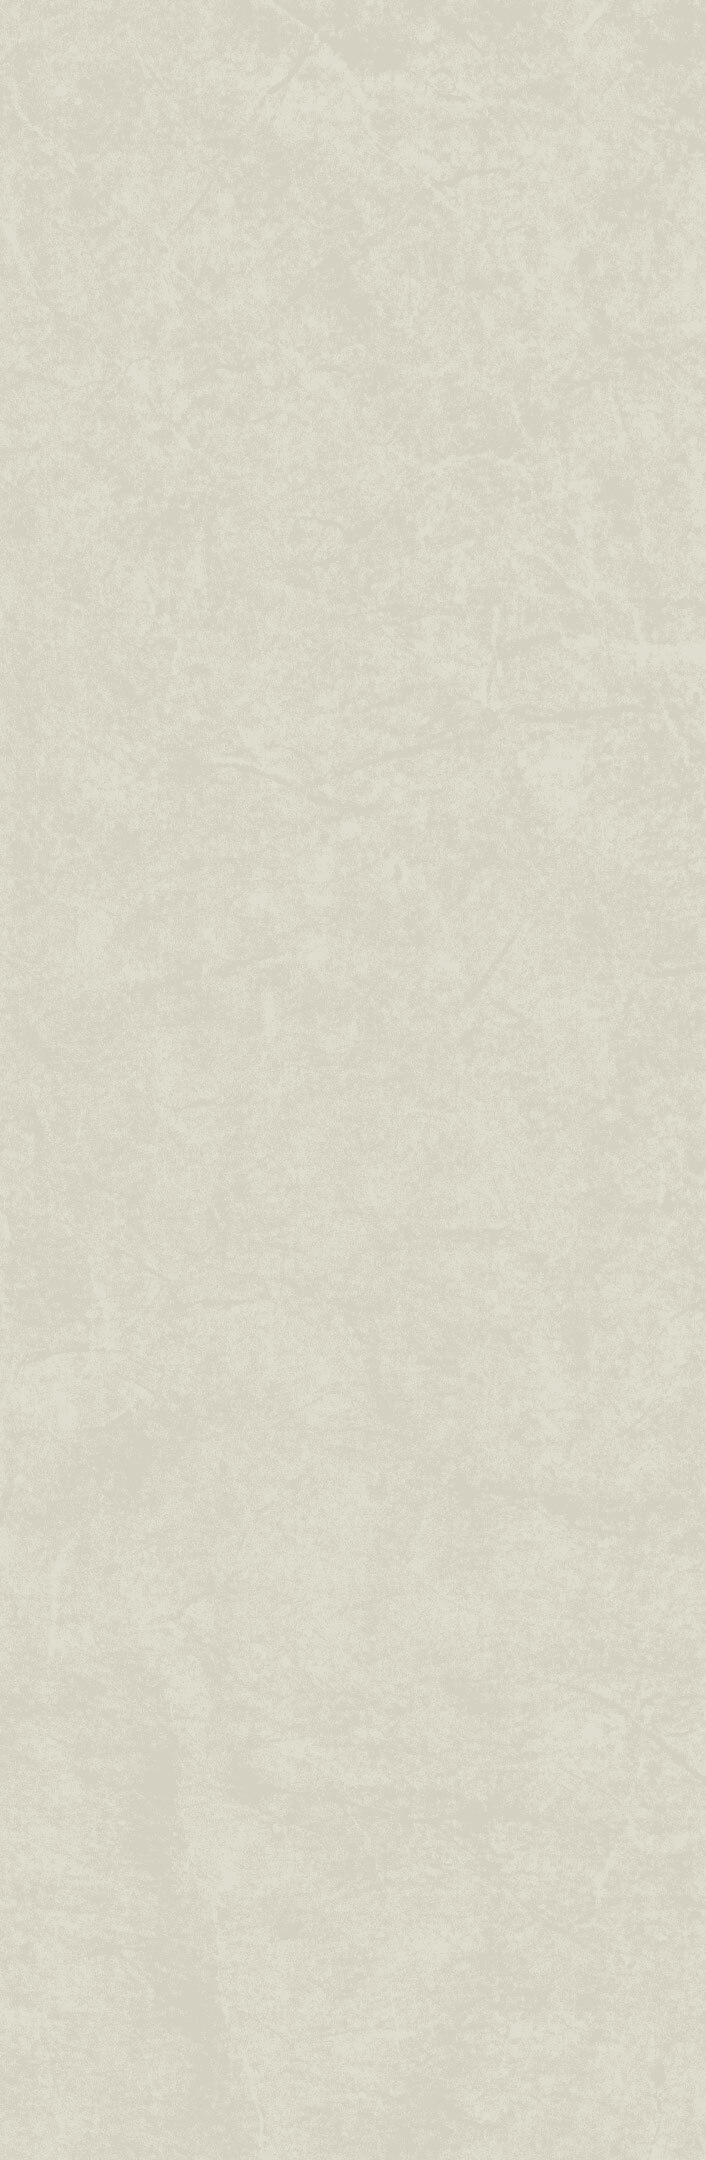 Плитка облицовочная Нефрит Кронштадт бежевая 600x200x9 мм (10 шт.=1,2 кв.м) плитка облицовочная нефрит кронштадт бежевая 60х20 см 10 шт 1 2 кв м